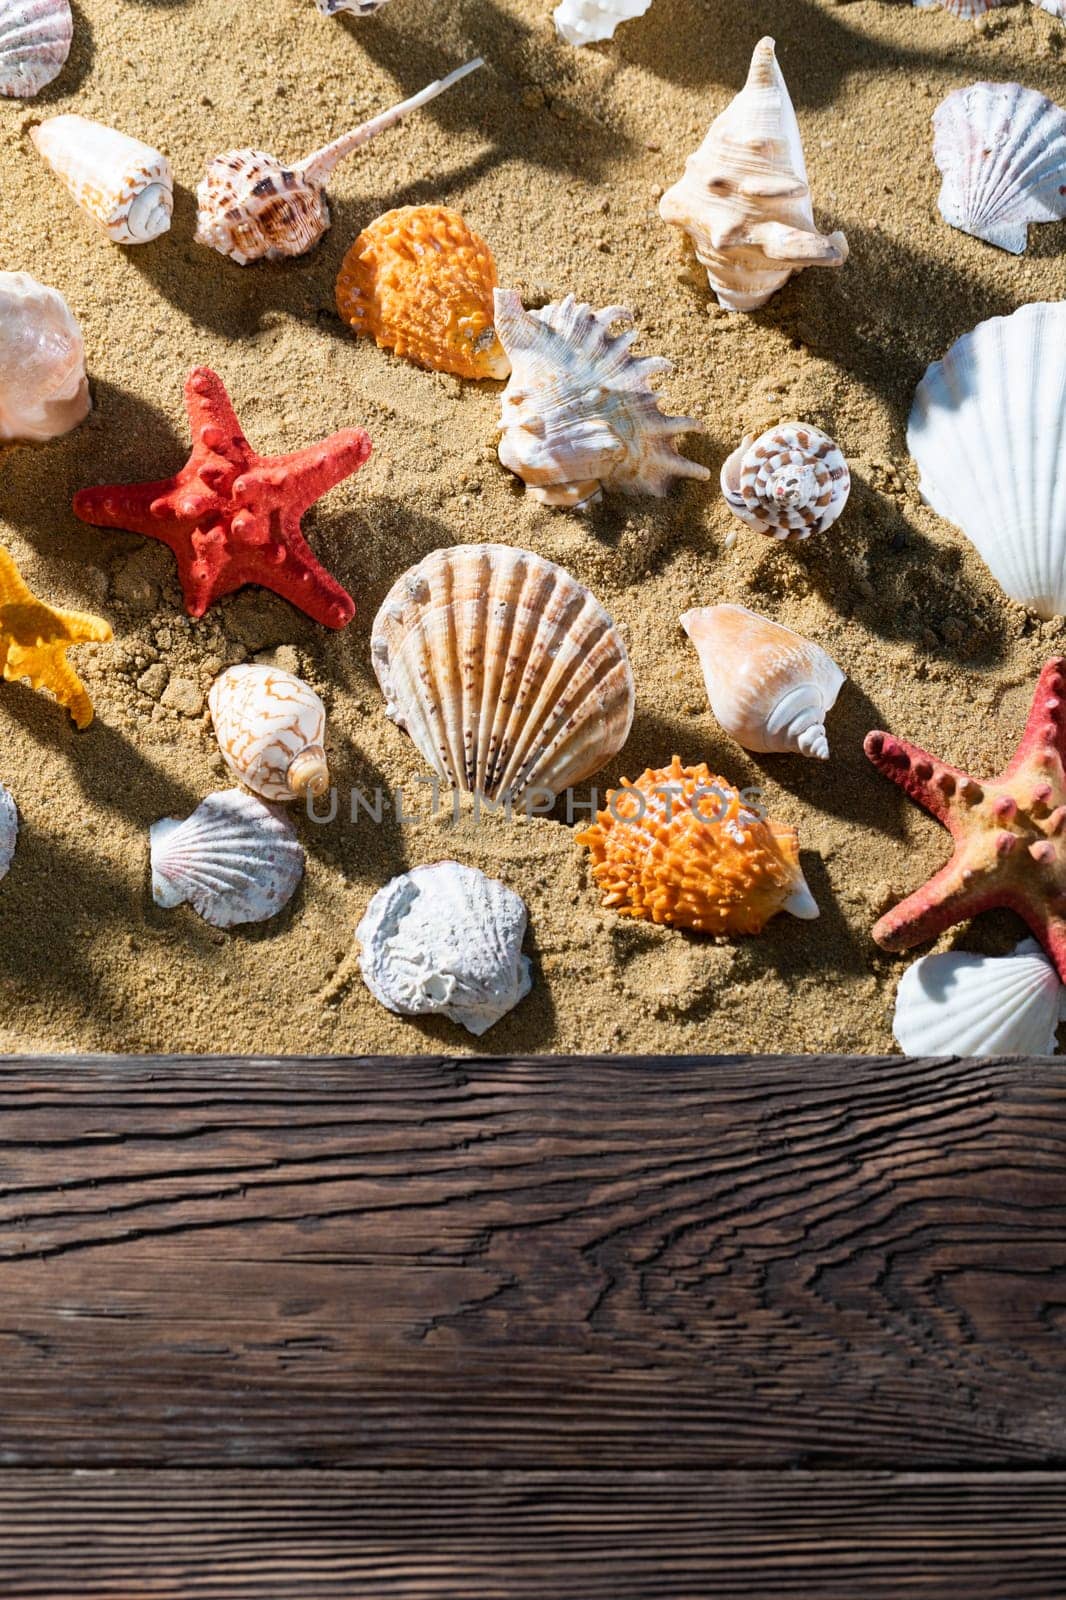 Solid wooden platform. A sandy beach where empty snail shells lie. Sea shore.